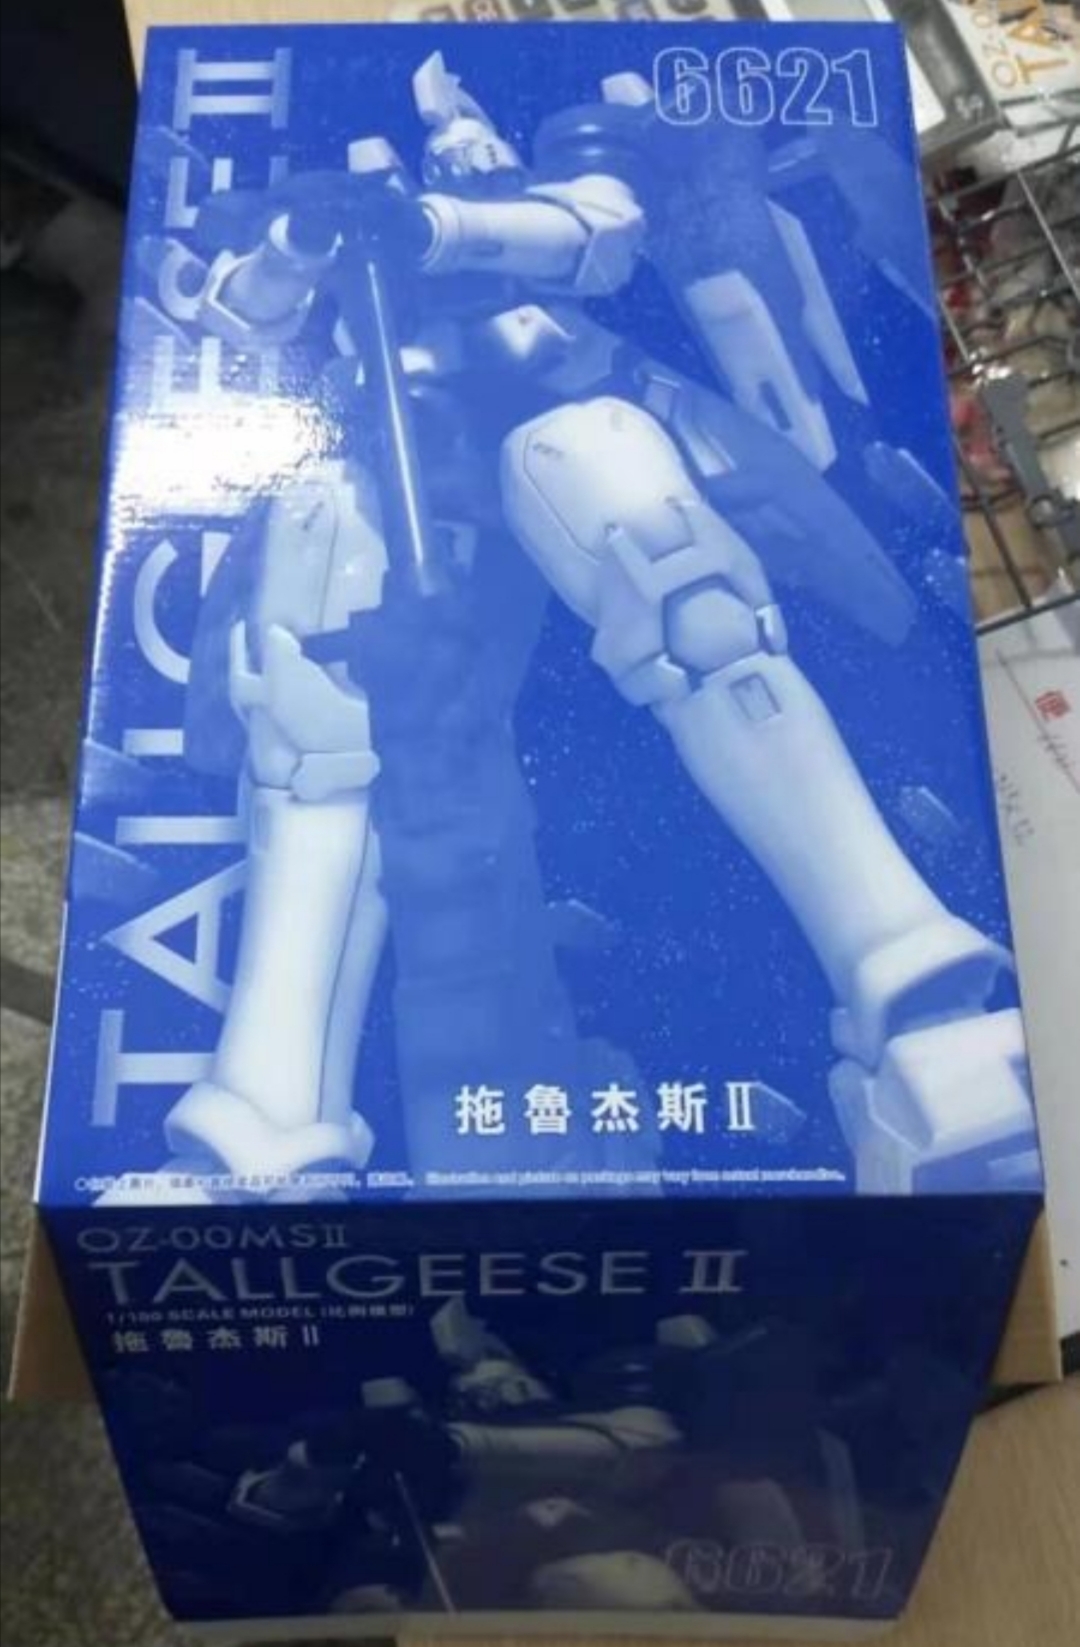 Daban 6621 Model MG 1/100 OZ-00MS Tallgeese 2 EW Gundam